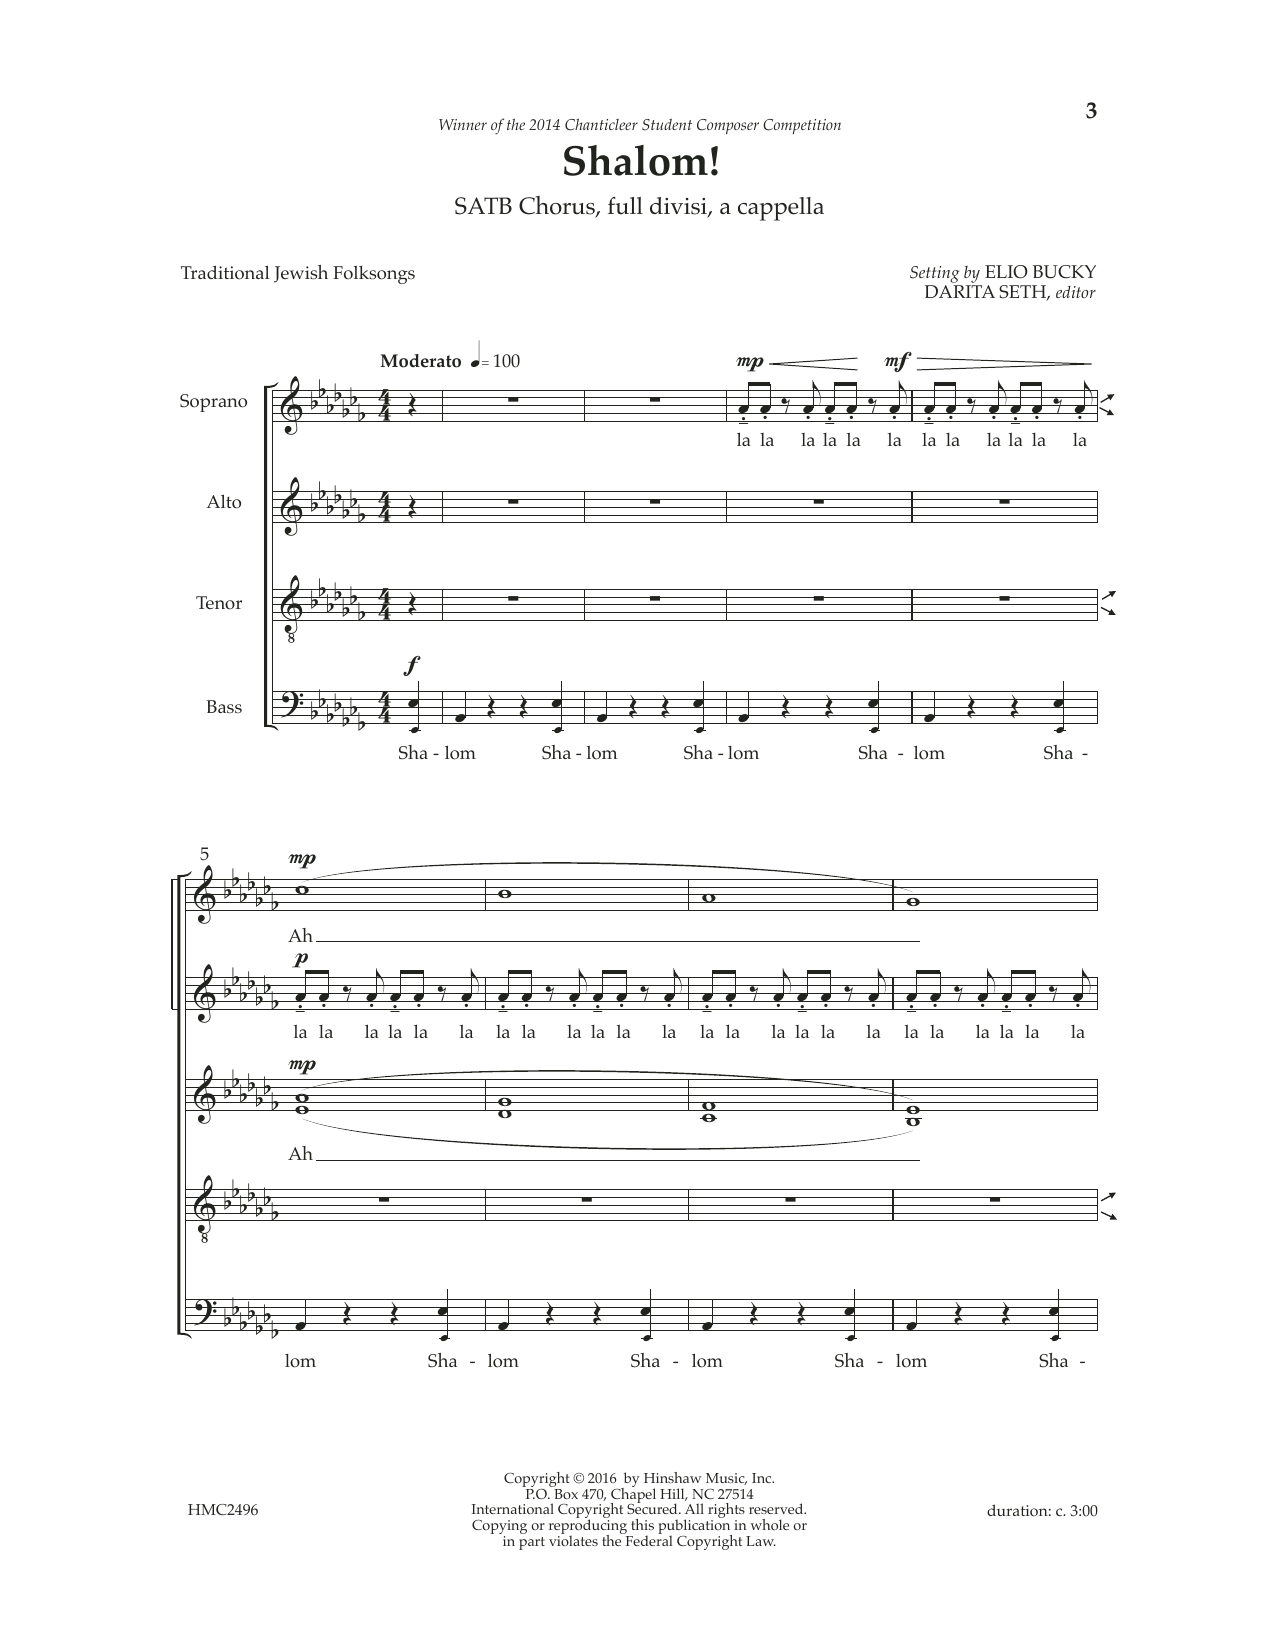 Elio Bucky Shalom (ed. Darita Seth) Sheet Music Notes & Chords for SATB Choir - Download or Print PDF